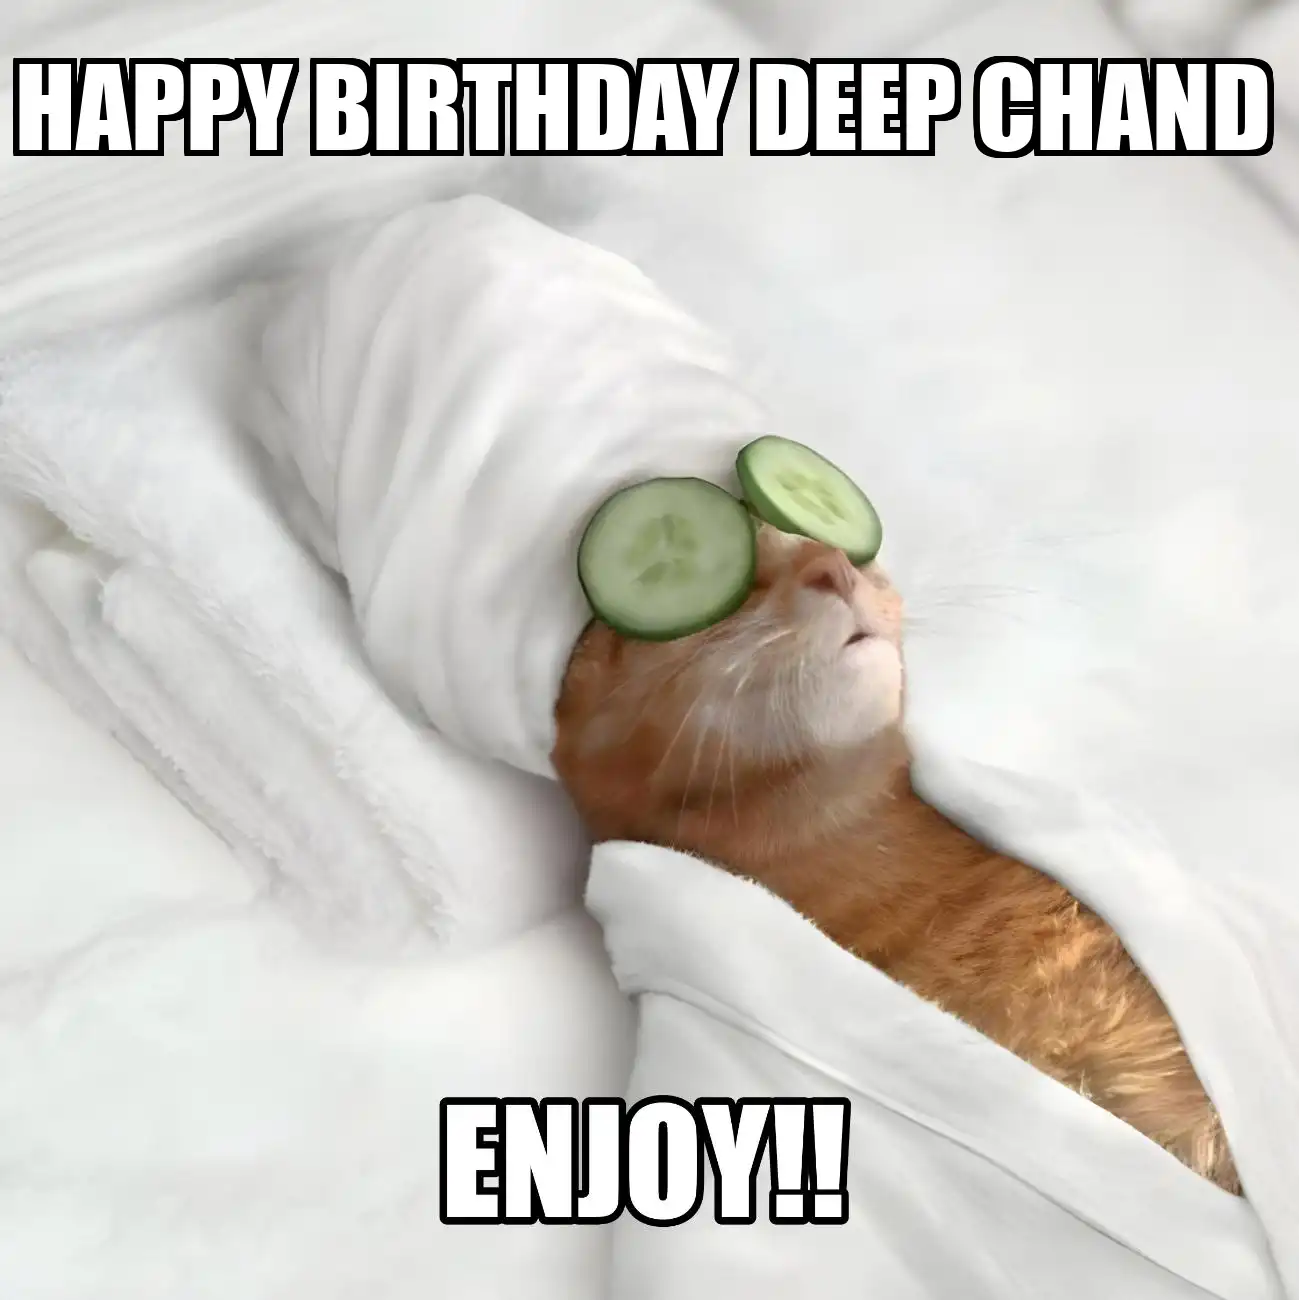 Happy Birthday Deep Chand Enjoy Cat Meme